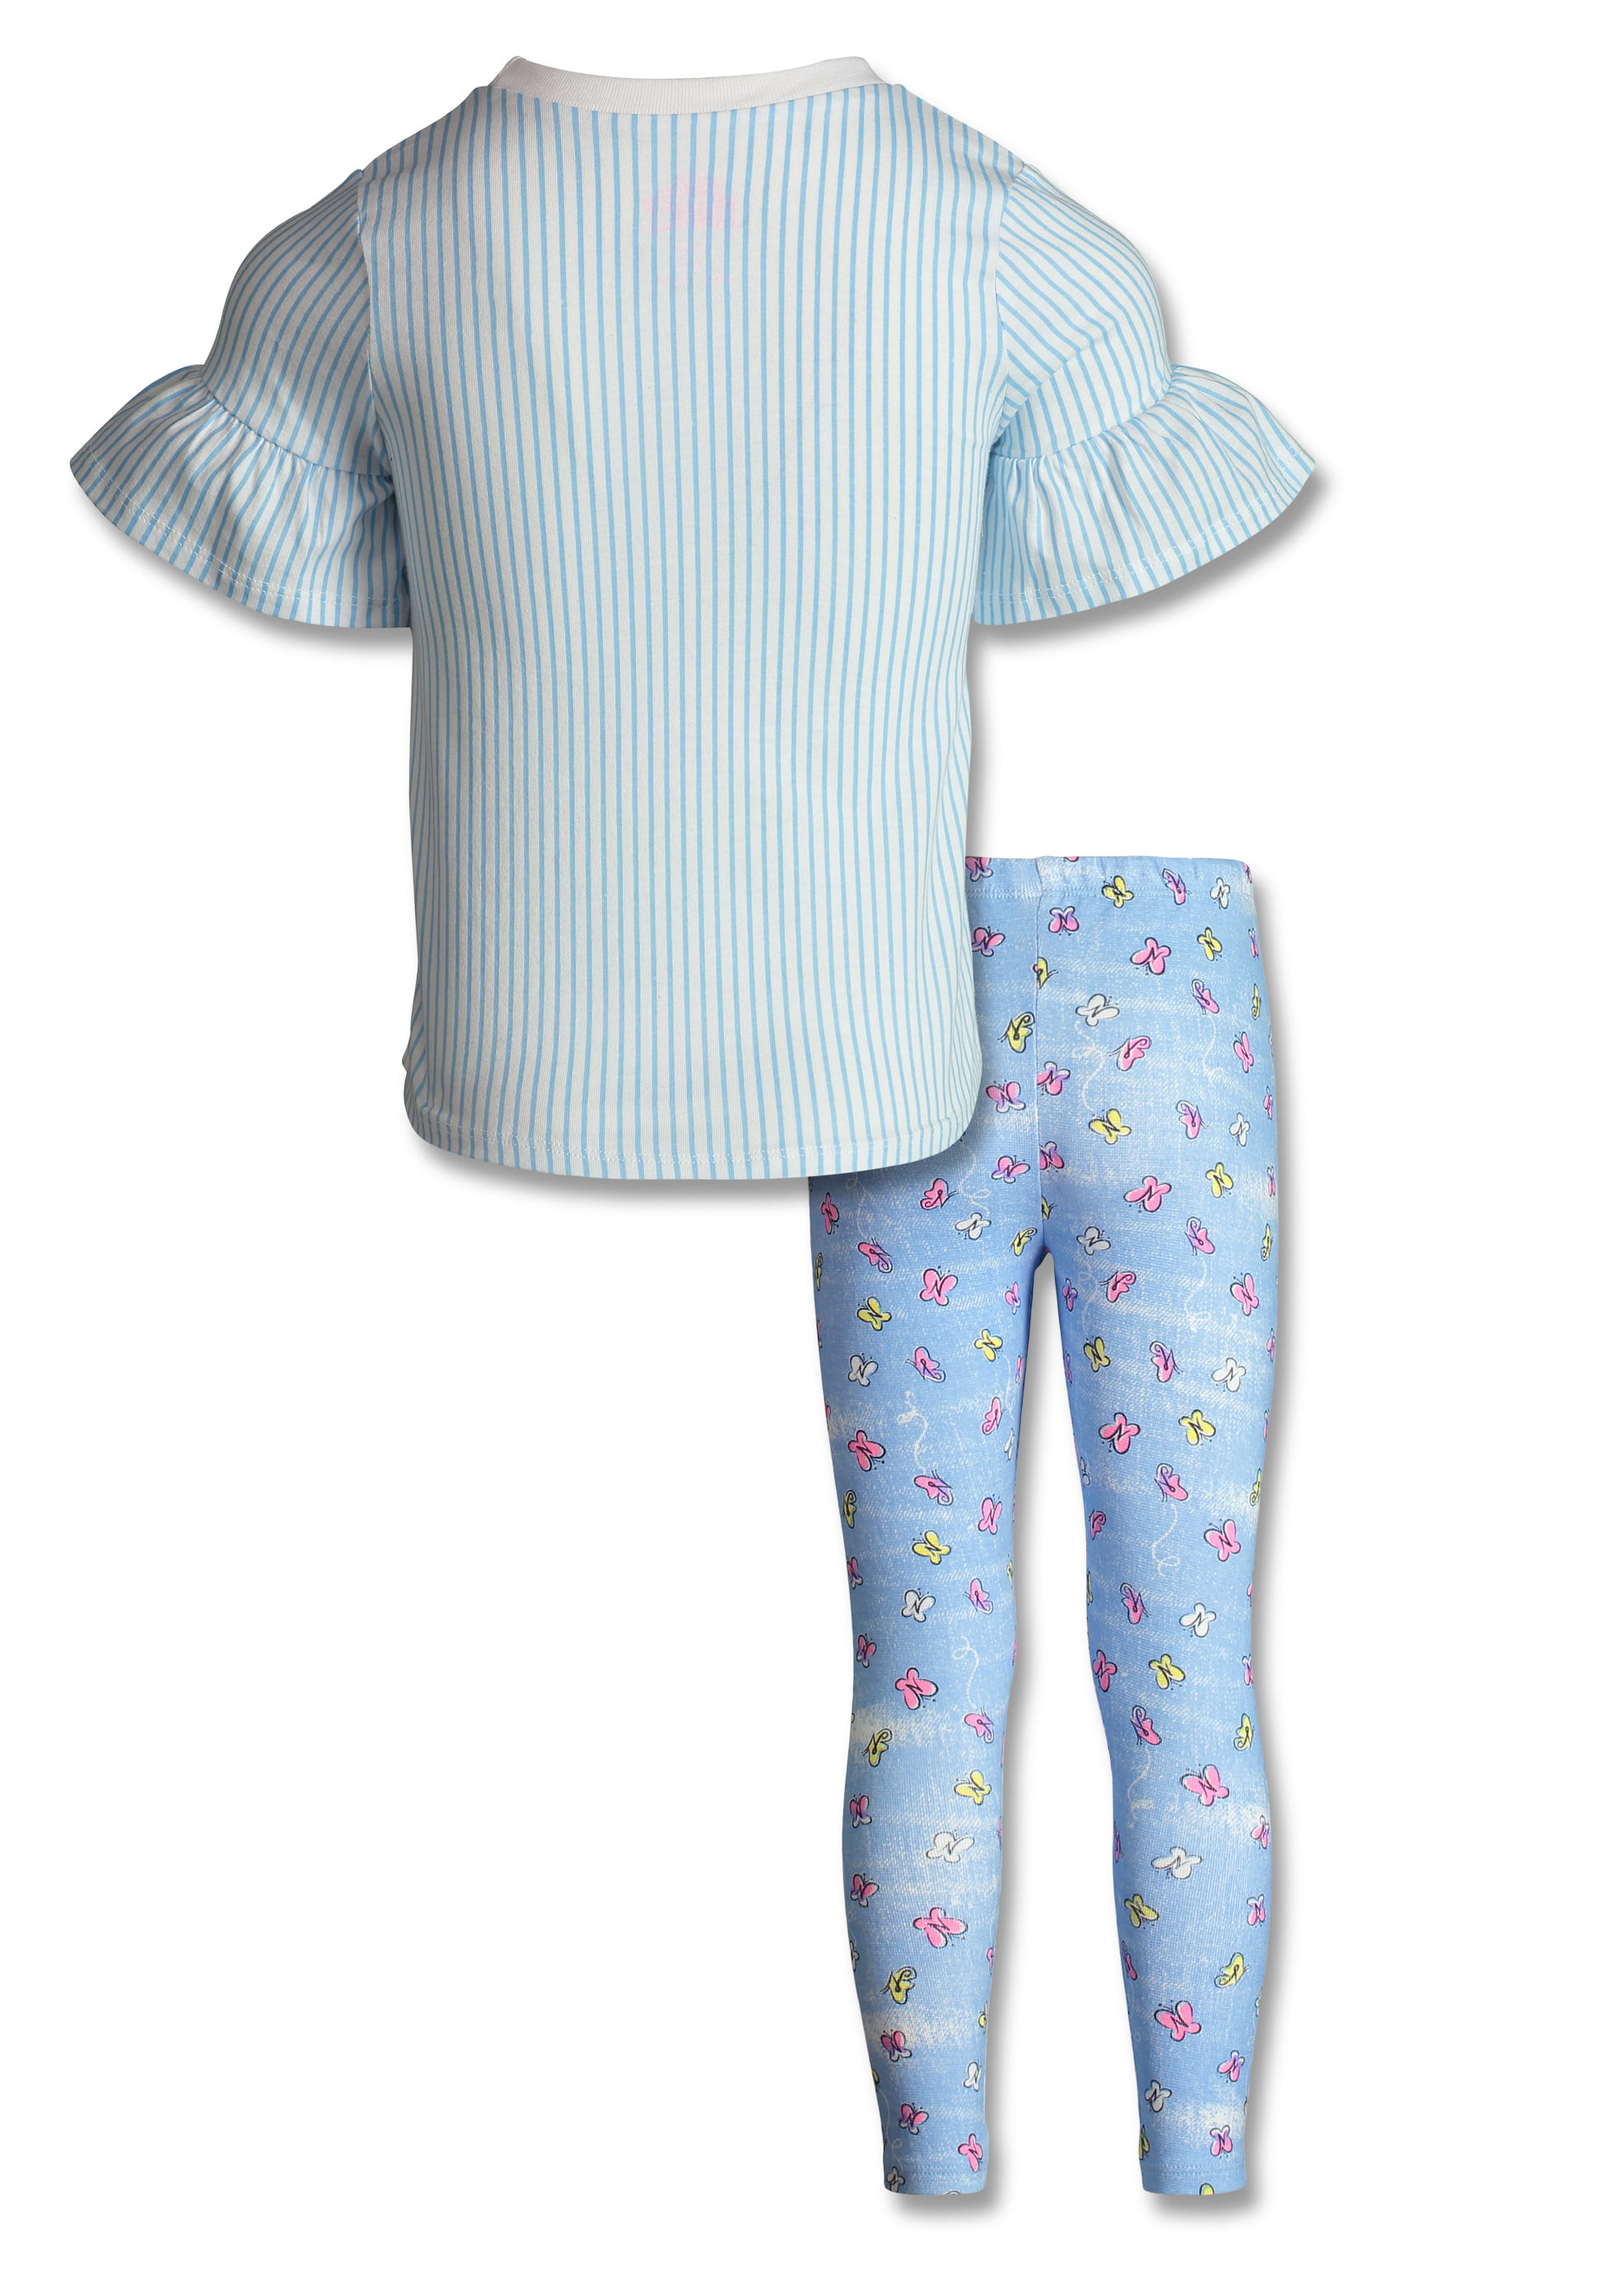 Disney Fancy Nancy Ruffle Short Sleeve T-Shirt Top & Leggings Clothing Set